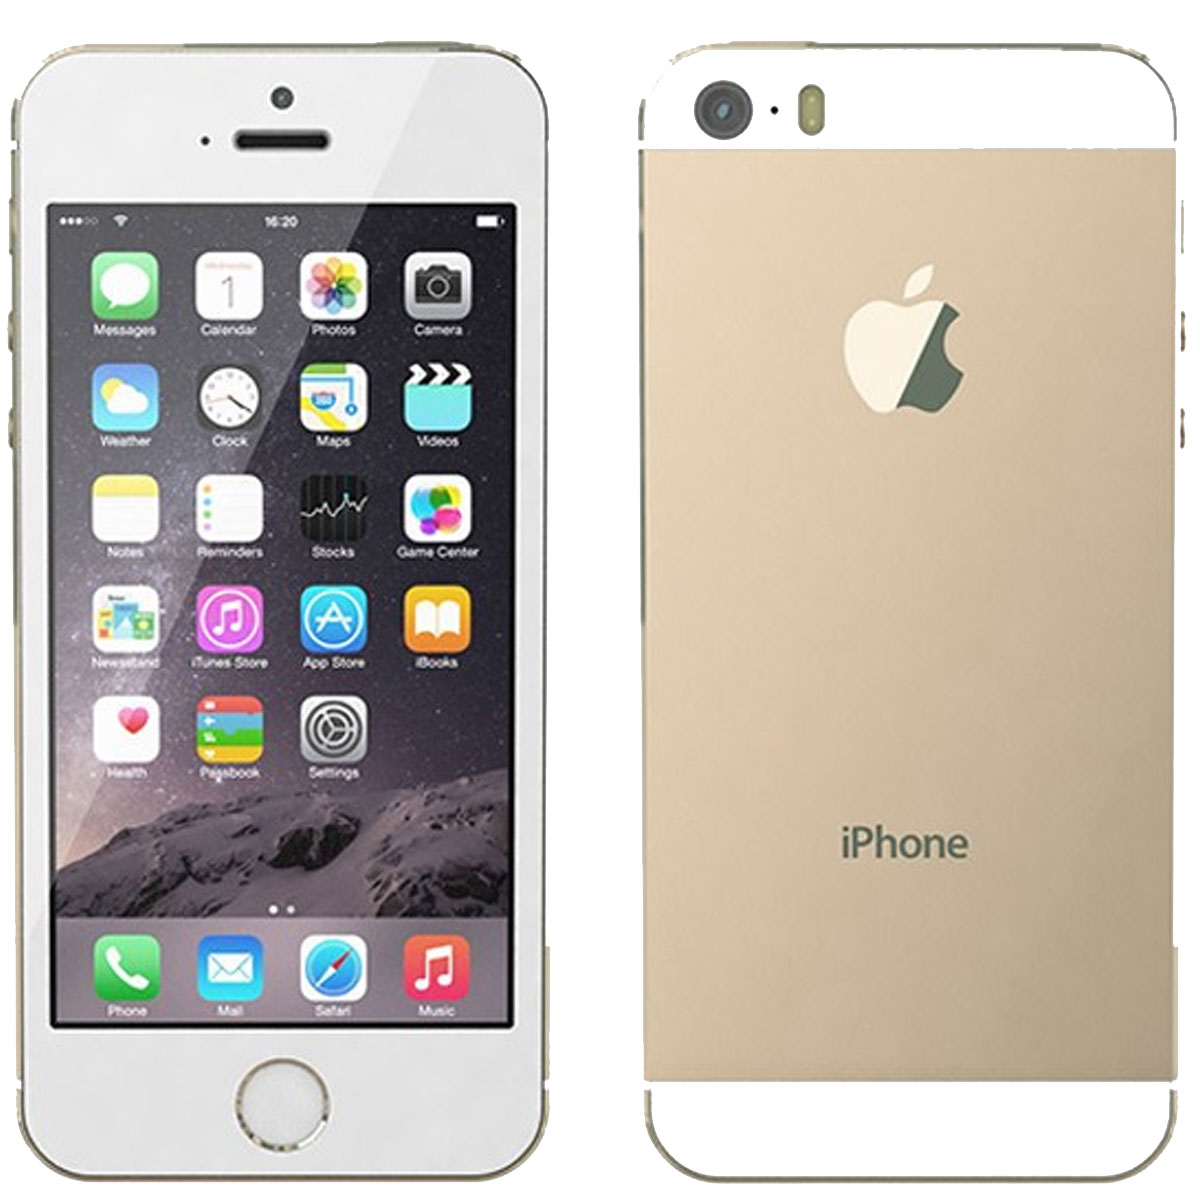 Sortie reservering Heel boos Apple iPhone 5s For Sale in Philly